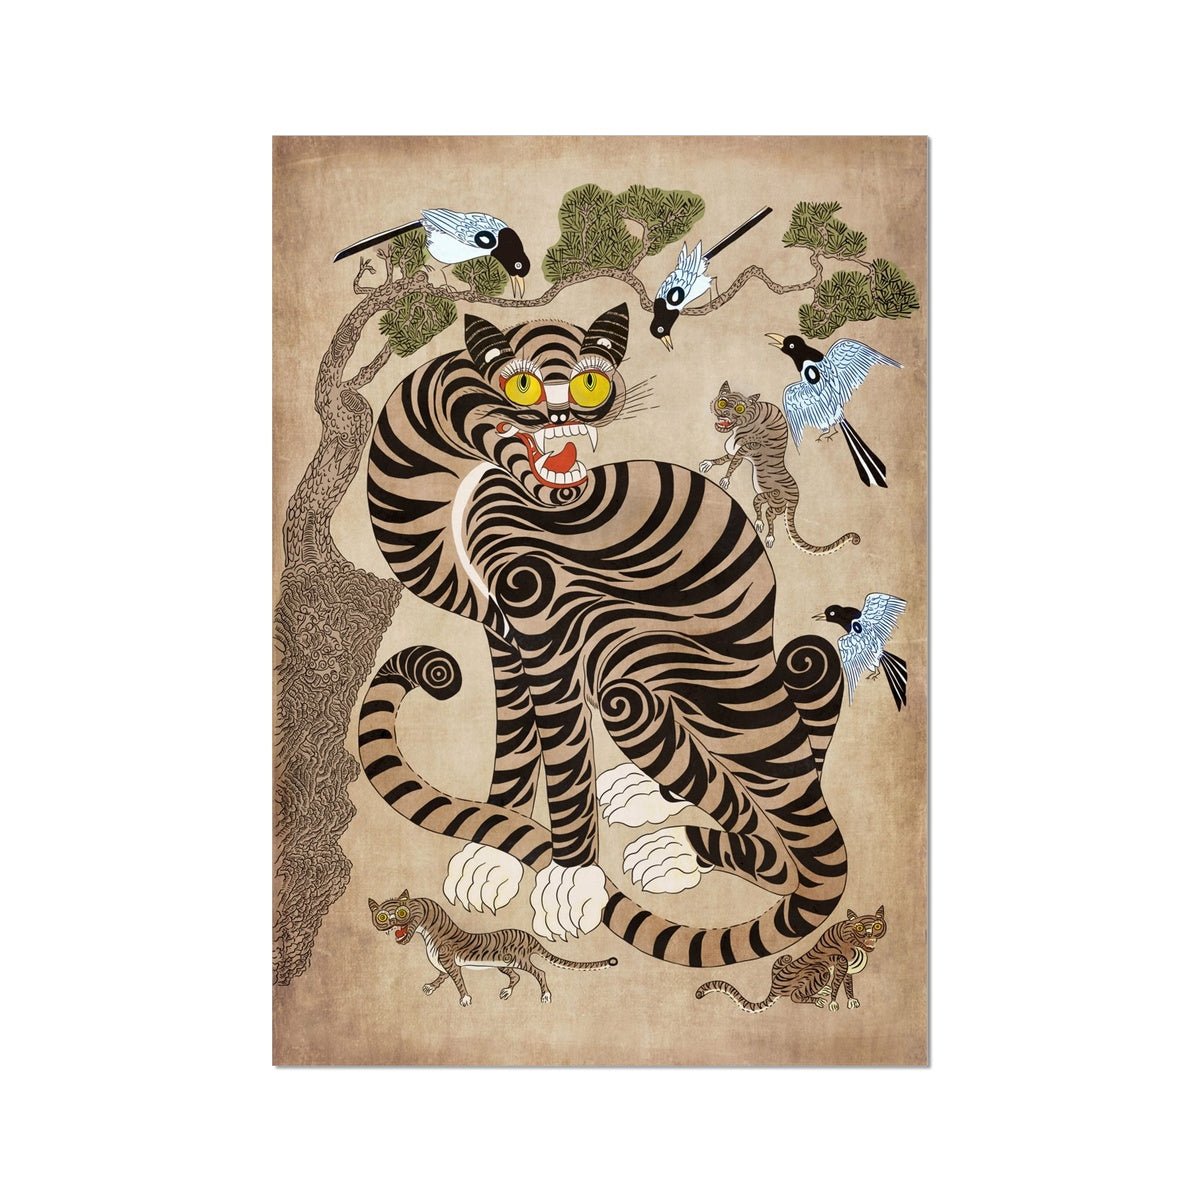 Fine art 4"x6" Rare Vintage Baekdu-daegan Tigers | Classic Korean Mythology Folklore | Nursery, Kid's Room Fun Jungle Decor | Cute Kawaii Fine Art Print